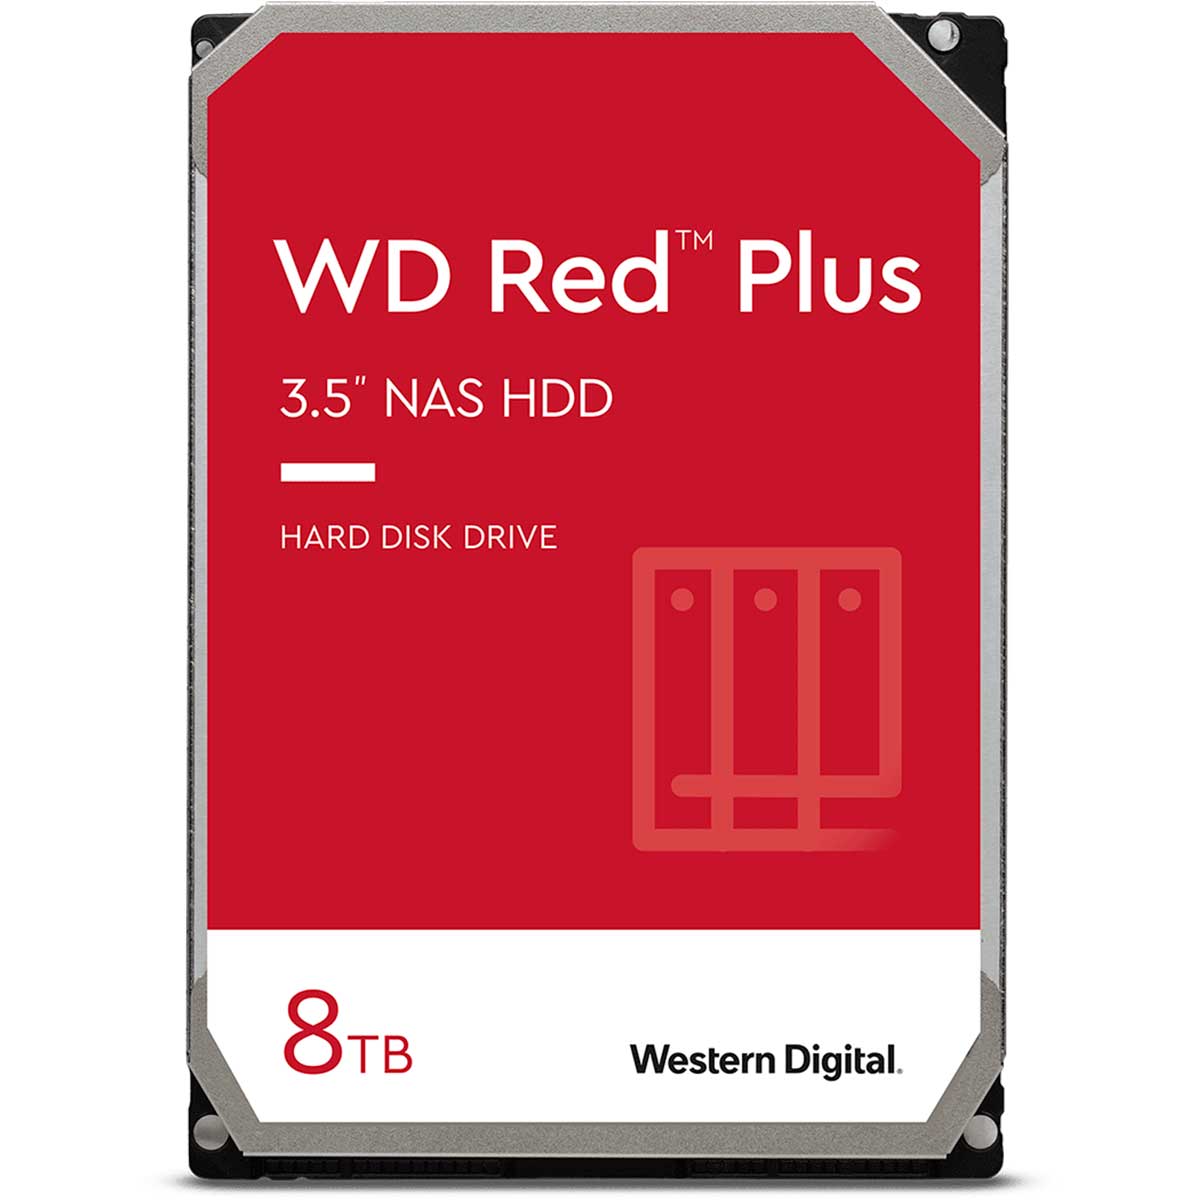 HD 8TB NAS SATA - 7200RPM - 256MB Cache - Western Digital RED Plus - WD80EFBX